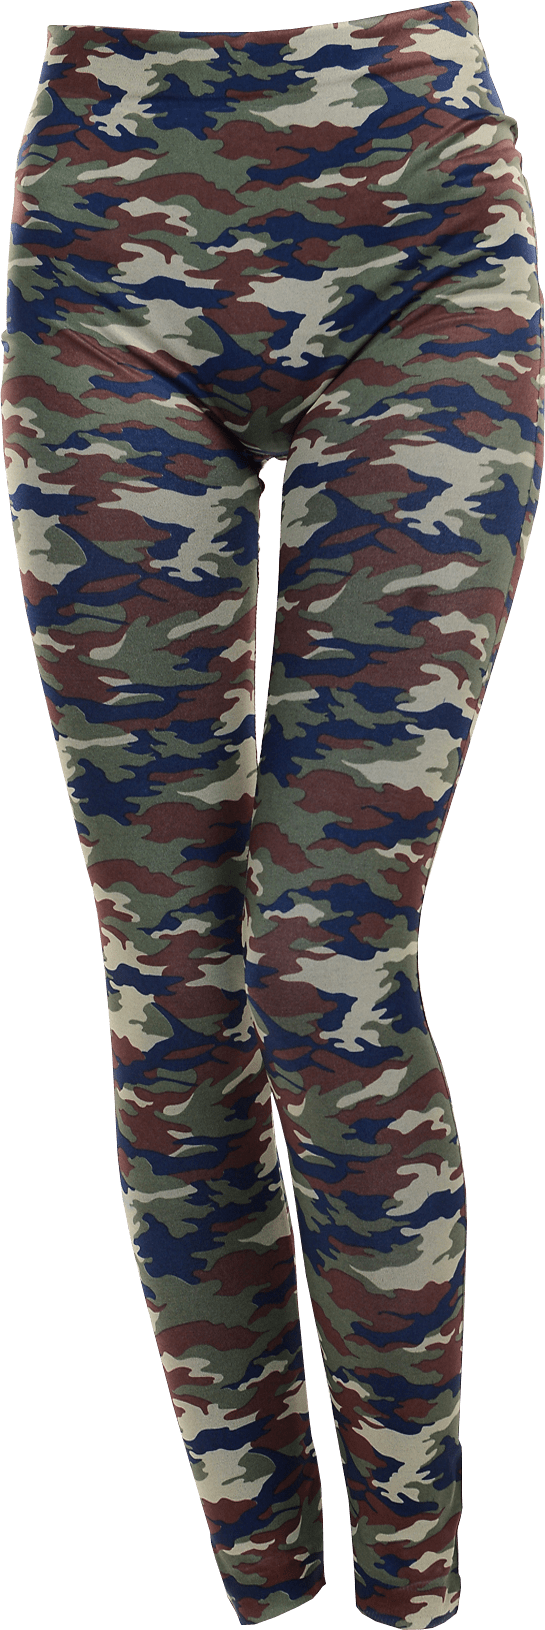 Camouflage-Leggings